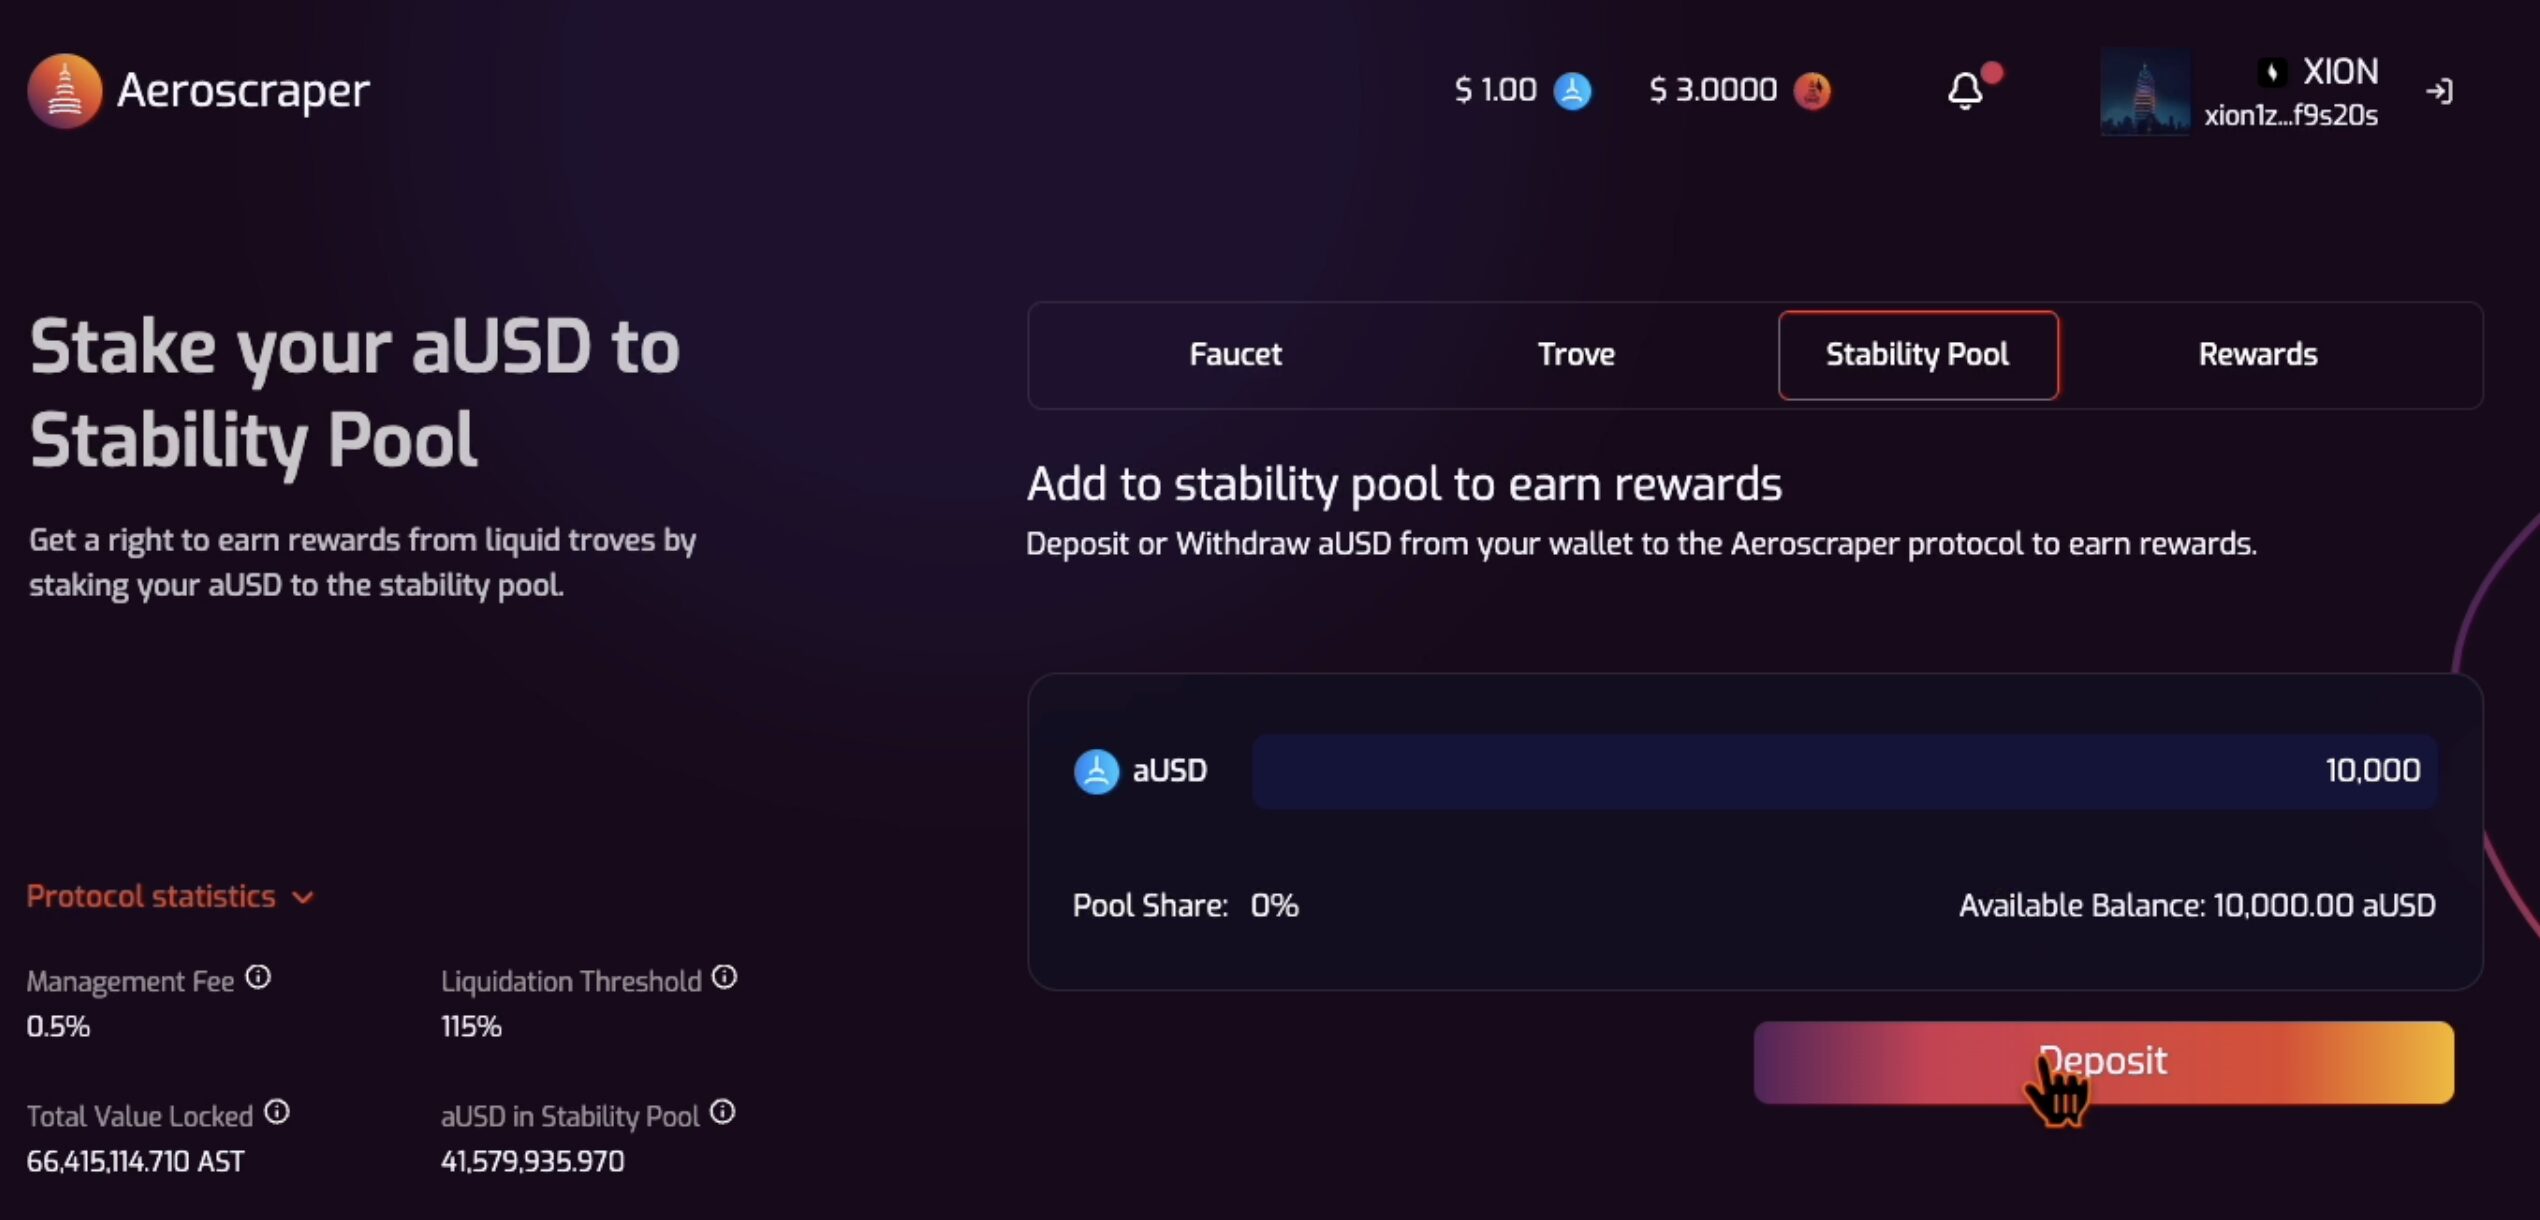 ③Stablity Poolを選択肢し、aUSDに「10,000」と入力し、「Deposit」をクリック。